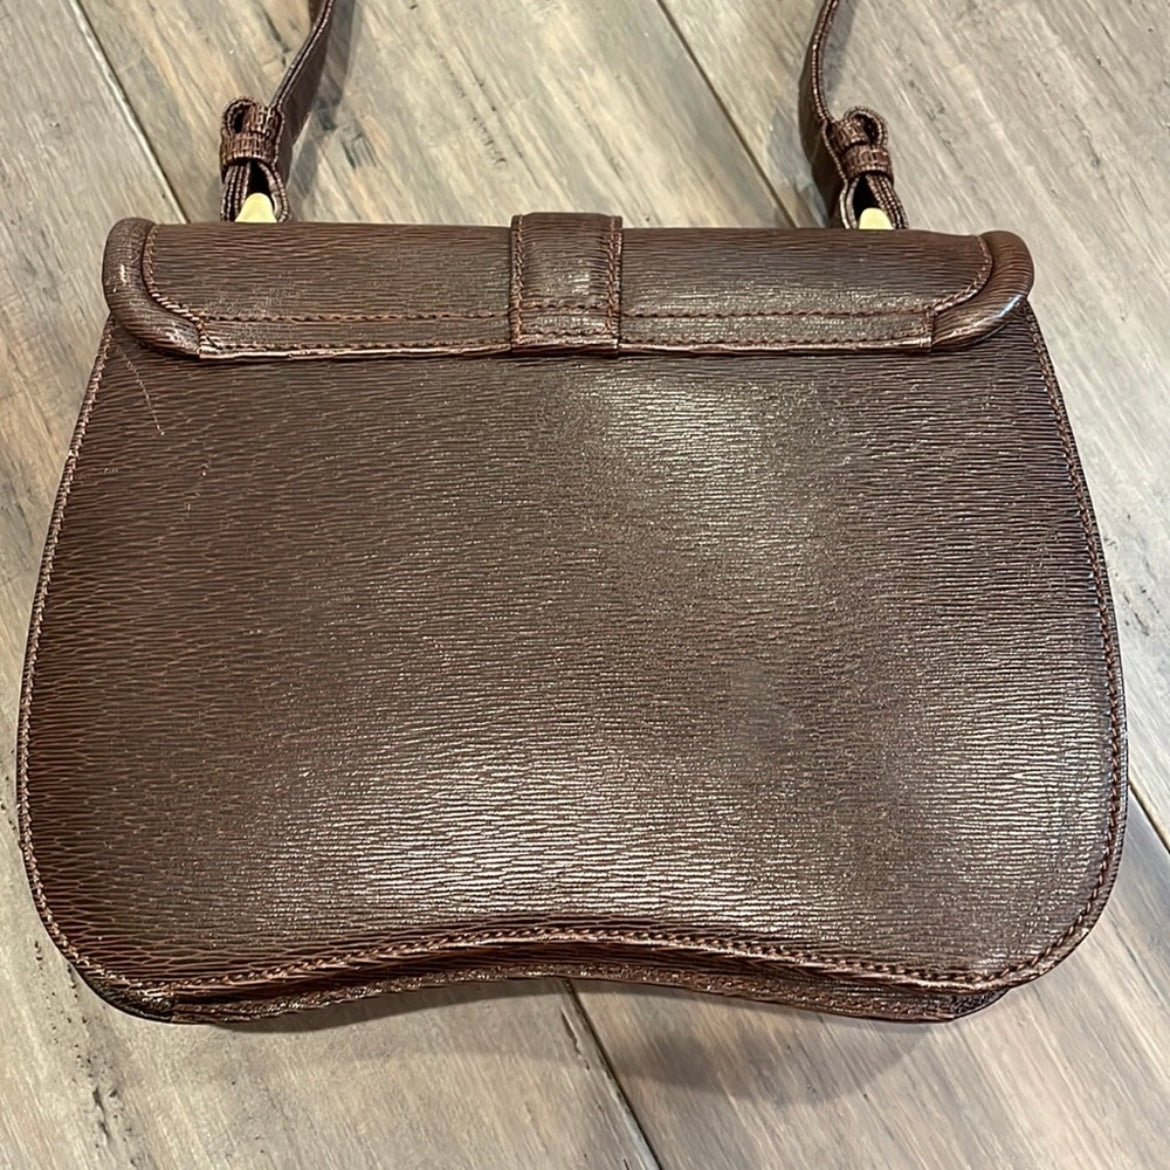 1995 Barry Kieselstein-Cord Brown Lux Leather Mini Handbag